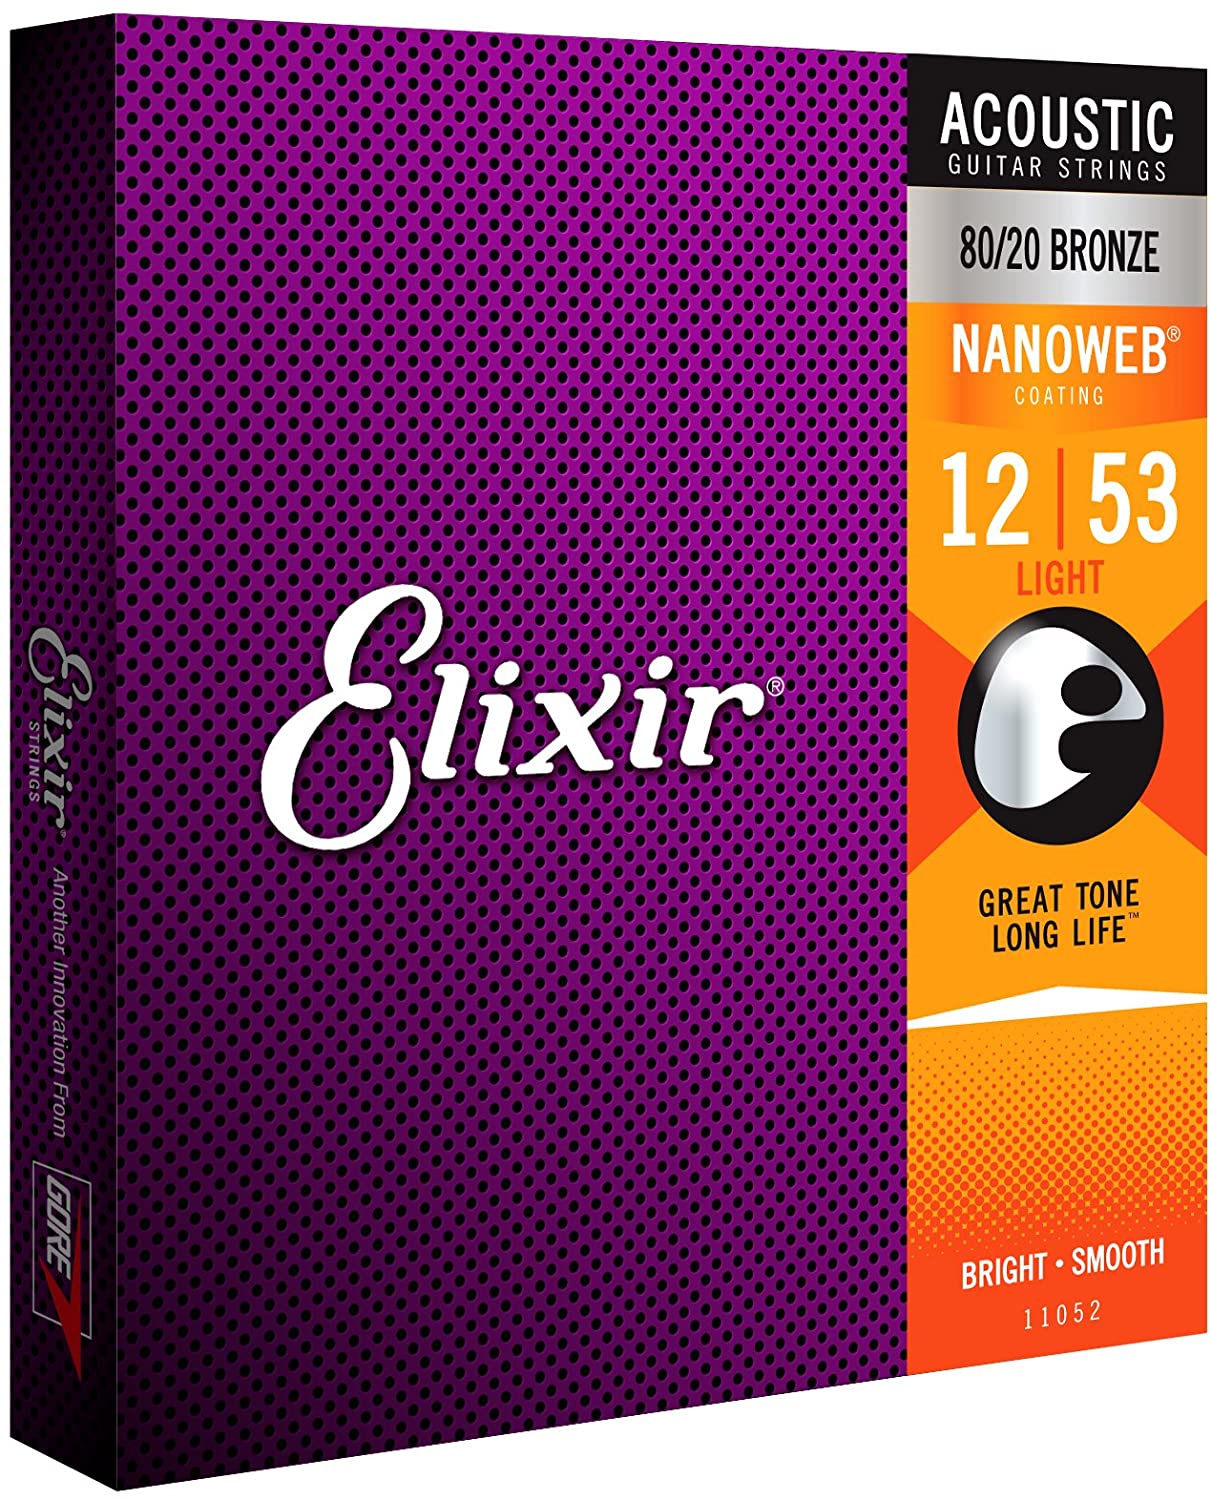 Elixir Strings 11052 Nanoweb 80/20 Acoustic Guitar Strings - .012-.053 Light 12 Pack